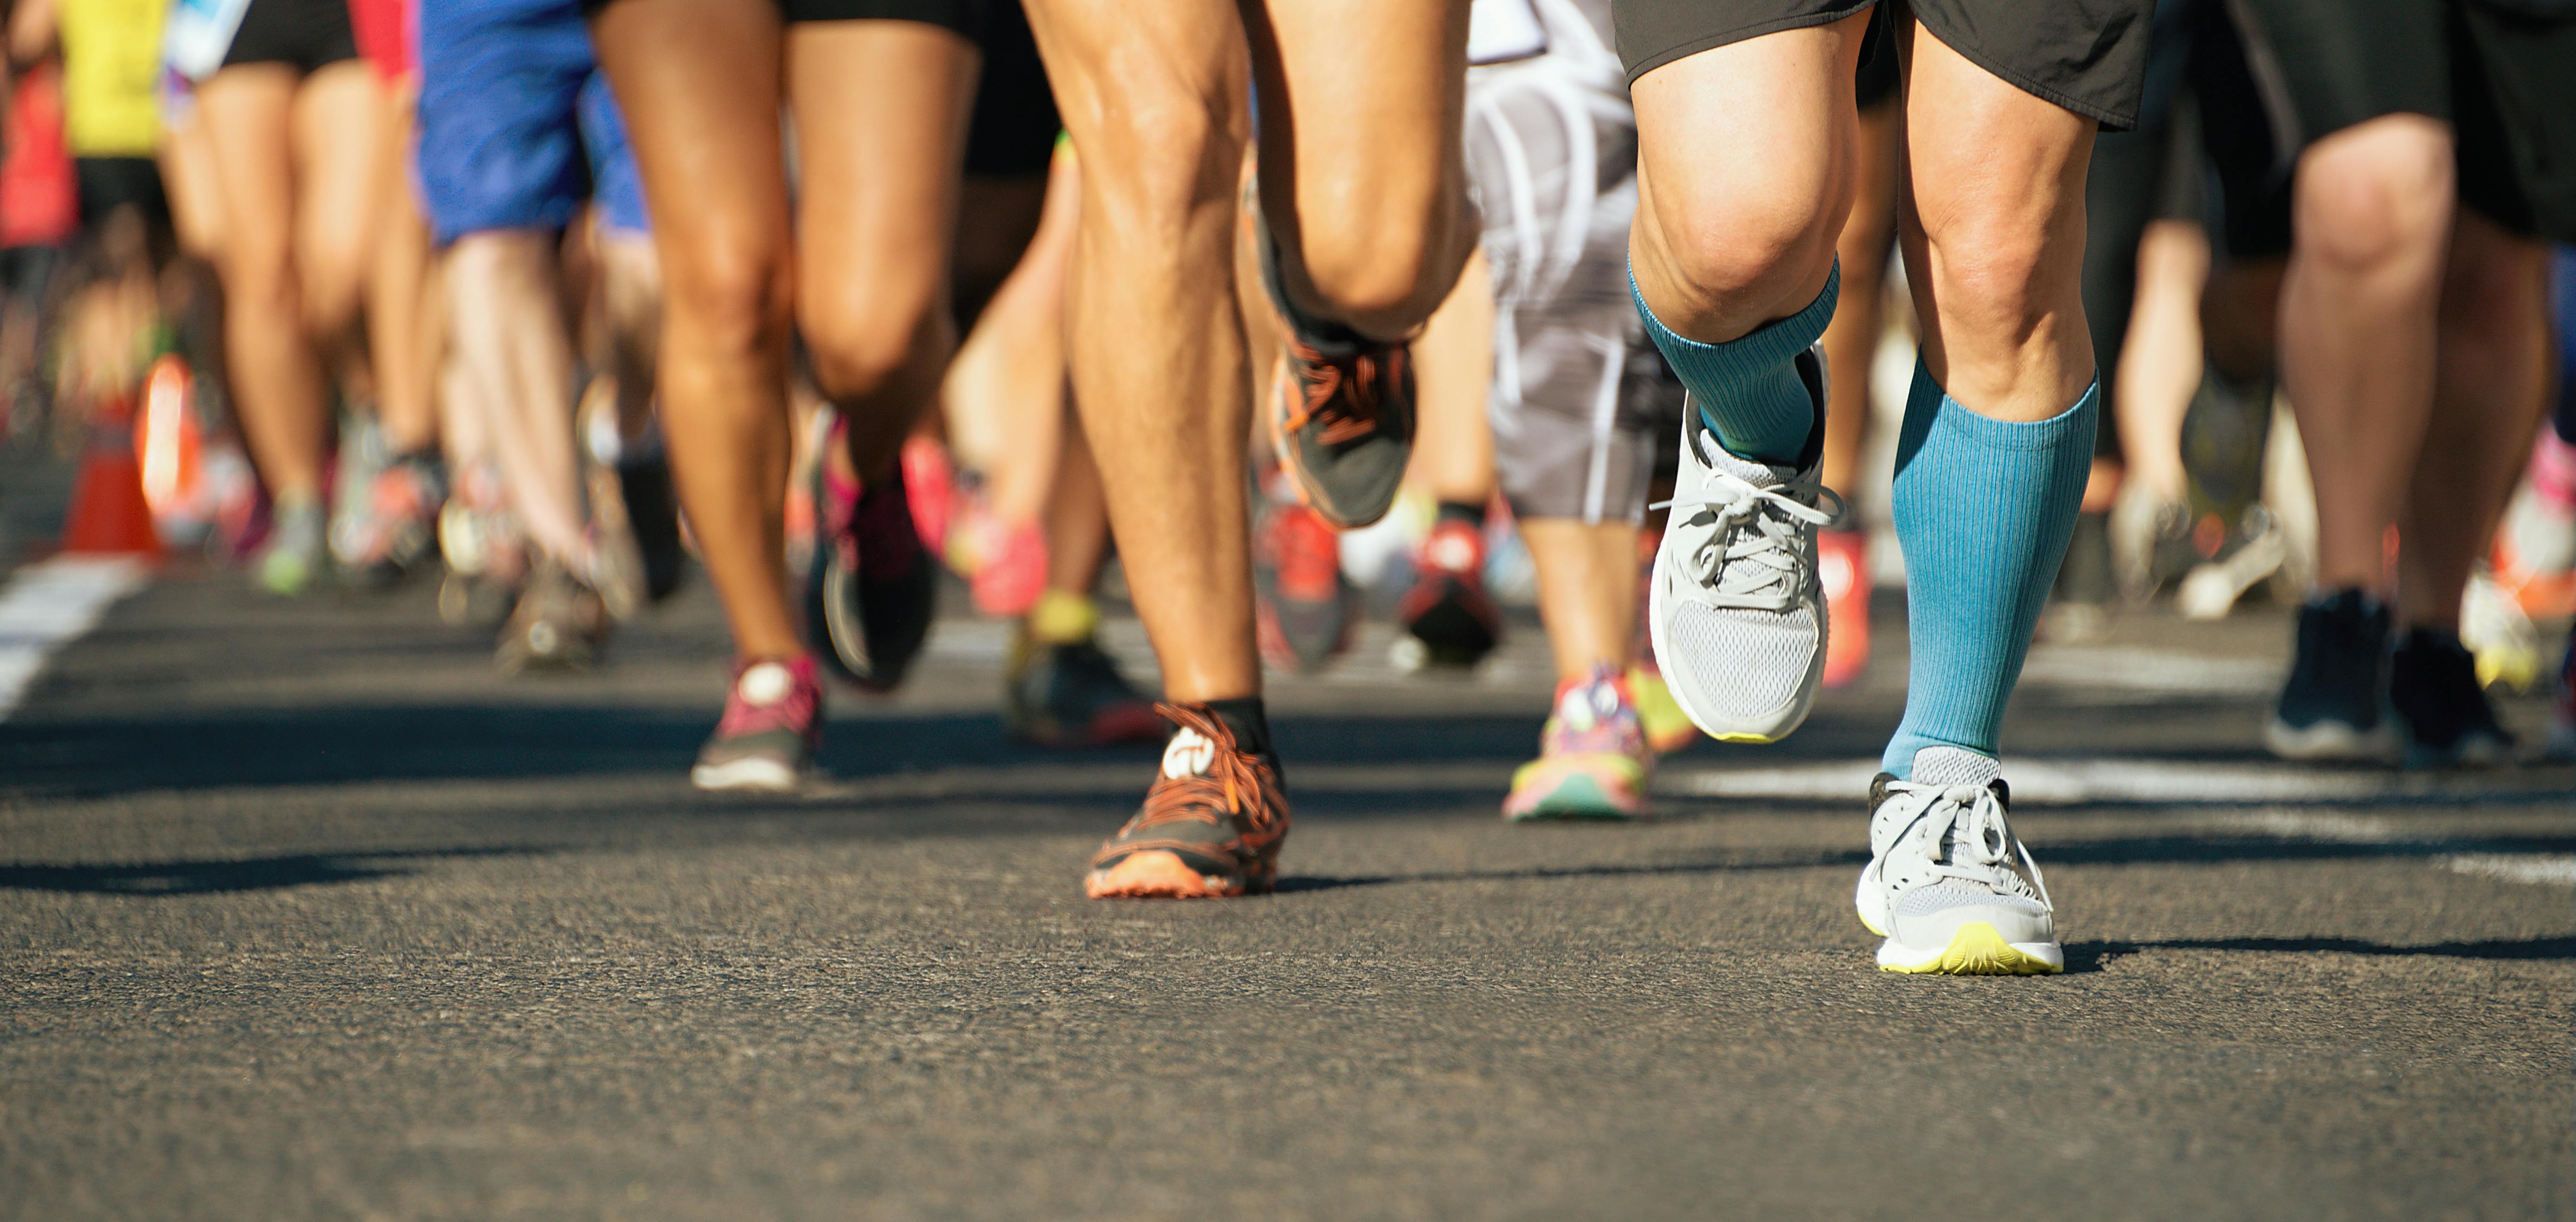 Feet running in marathon or race